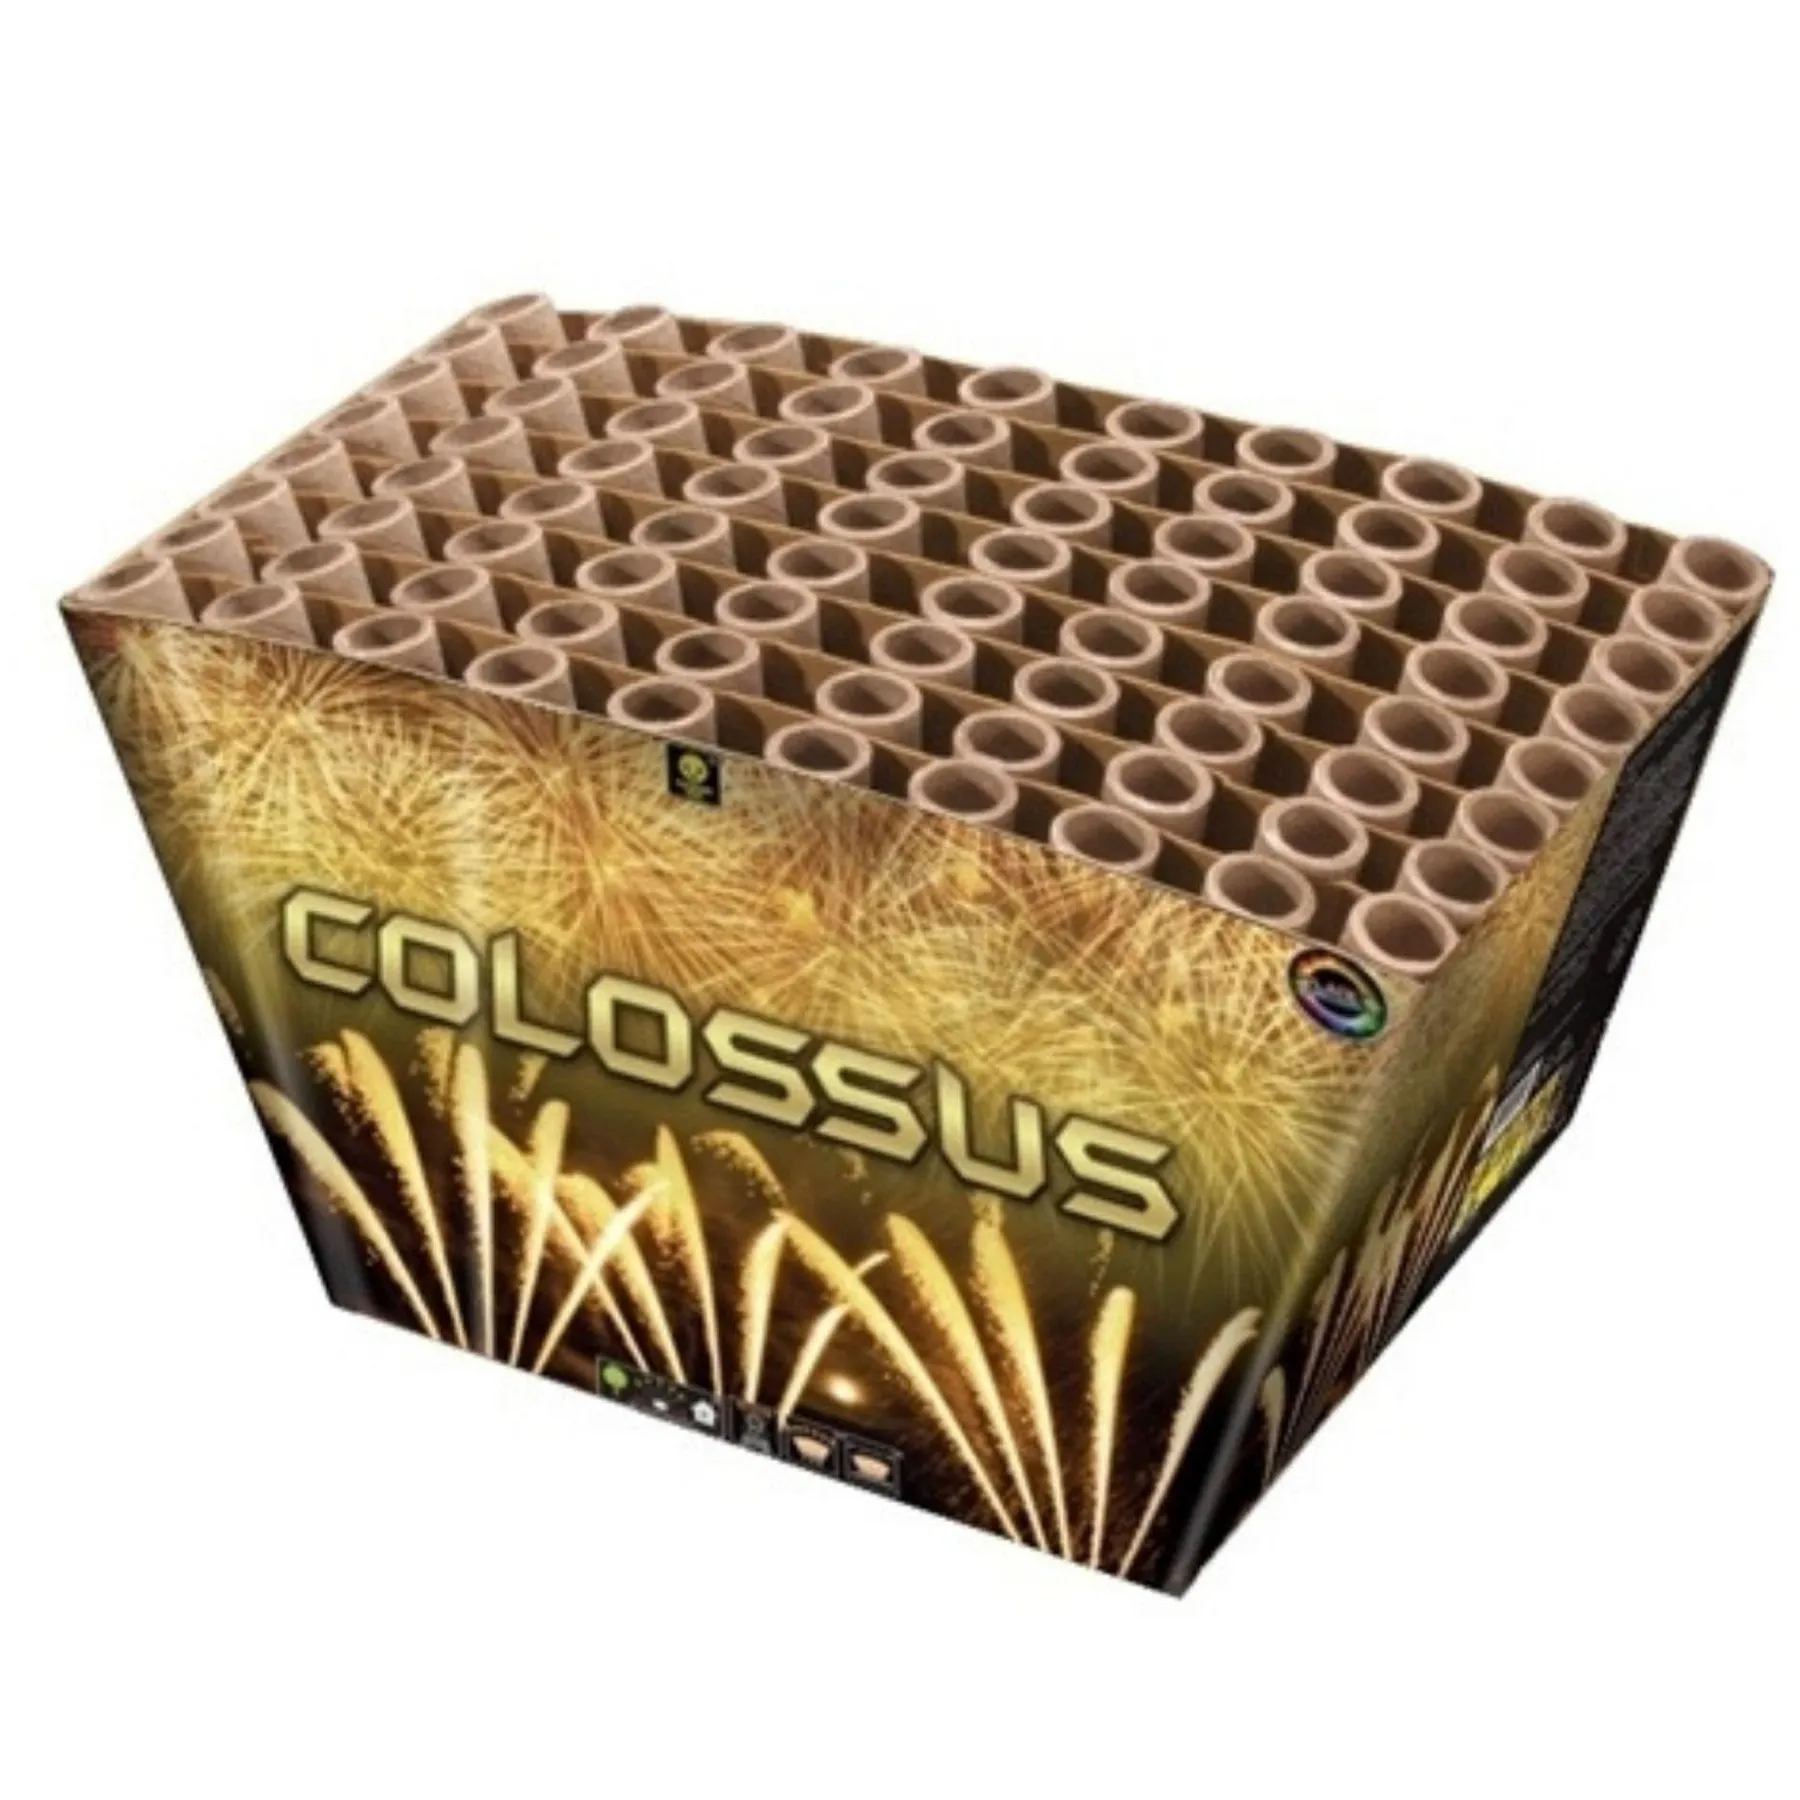 Colossus 1500x1500px f Zeus Fireworks